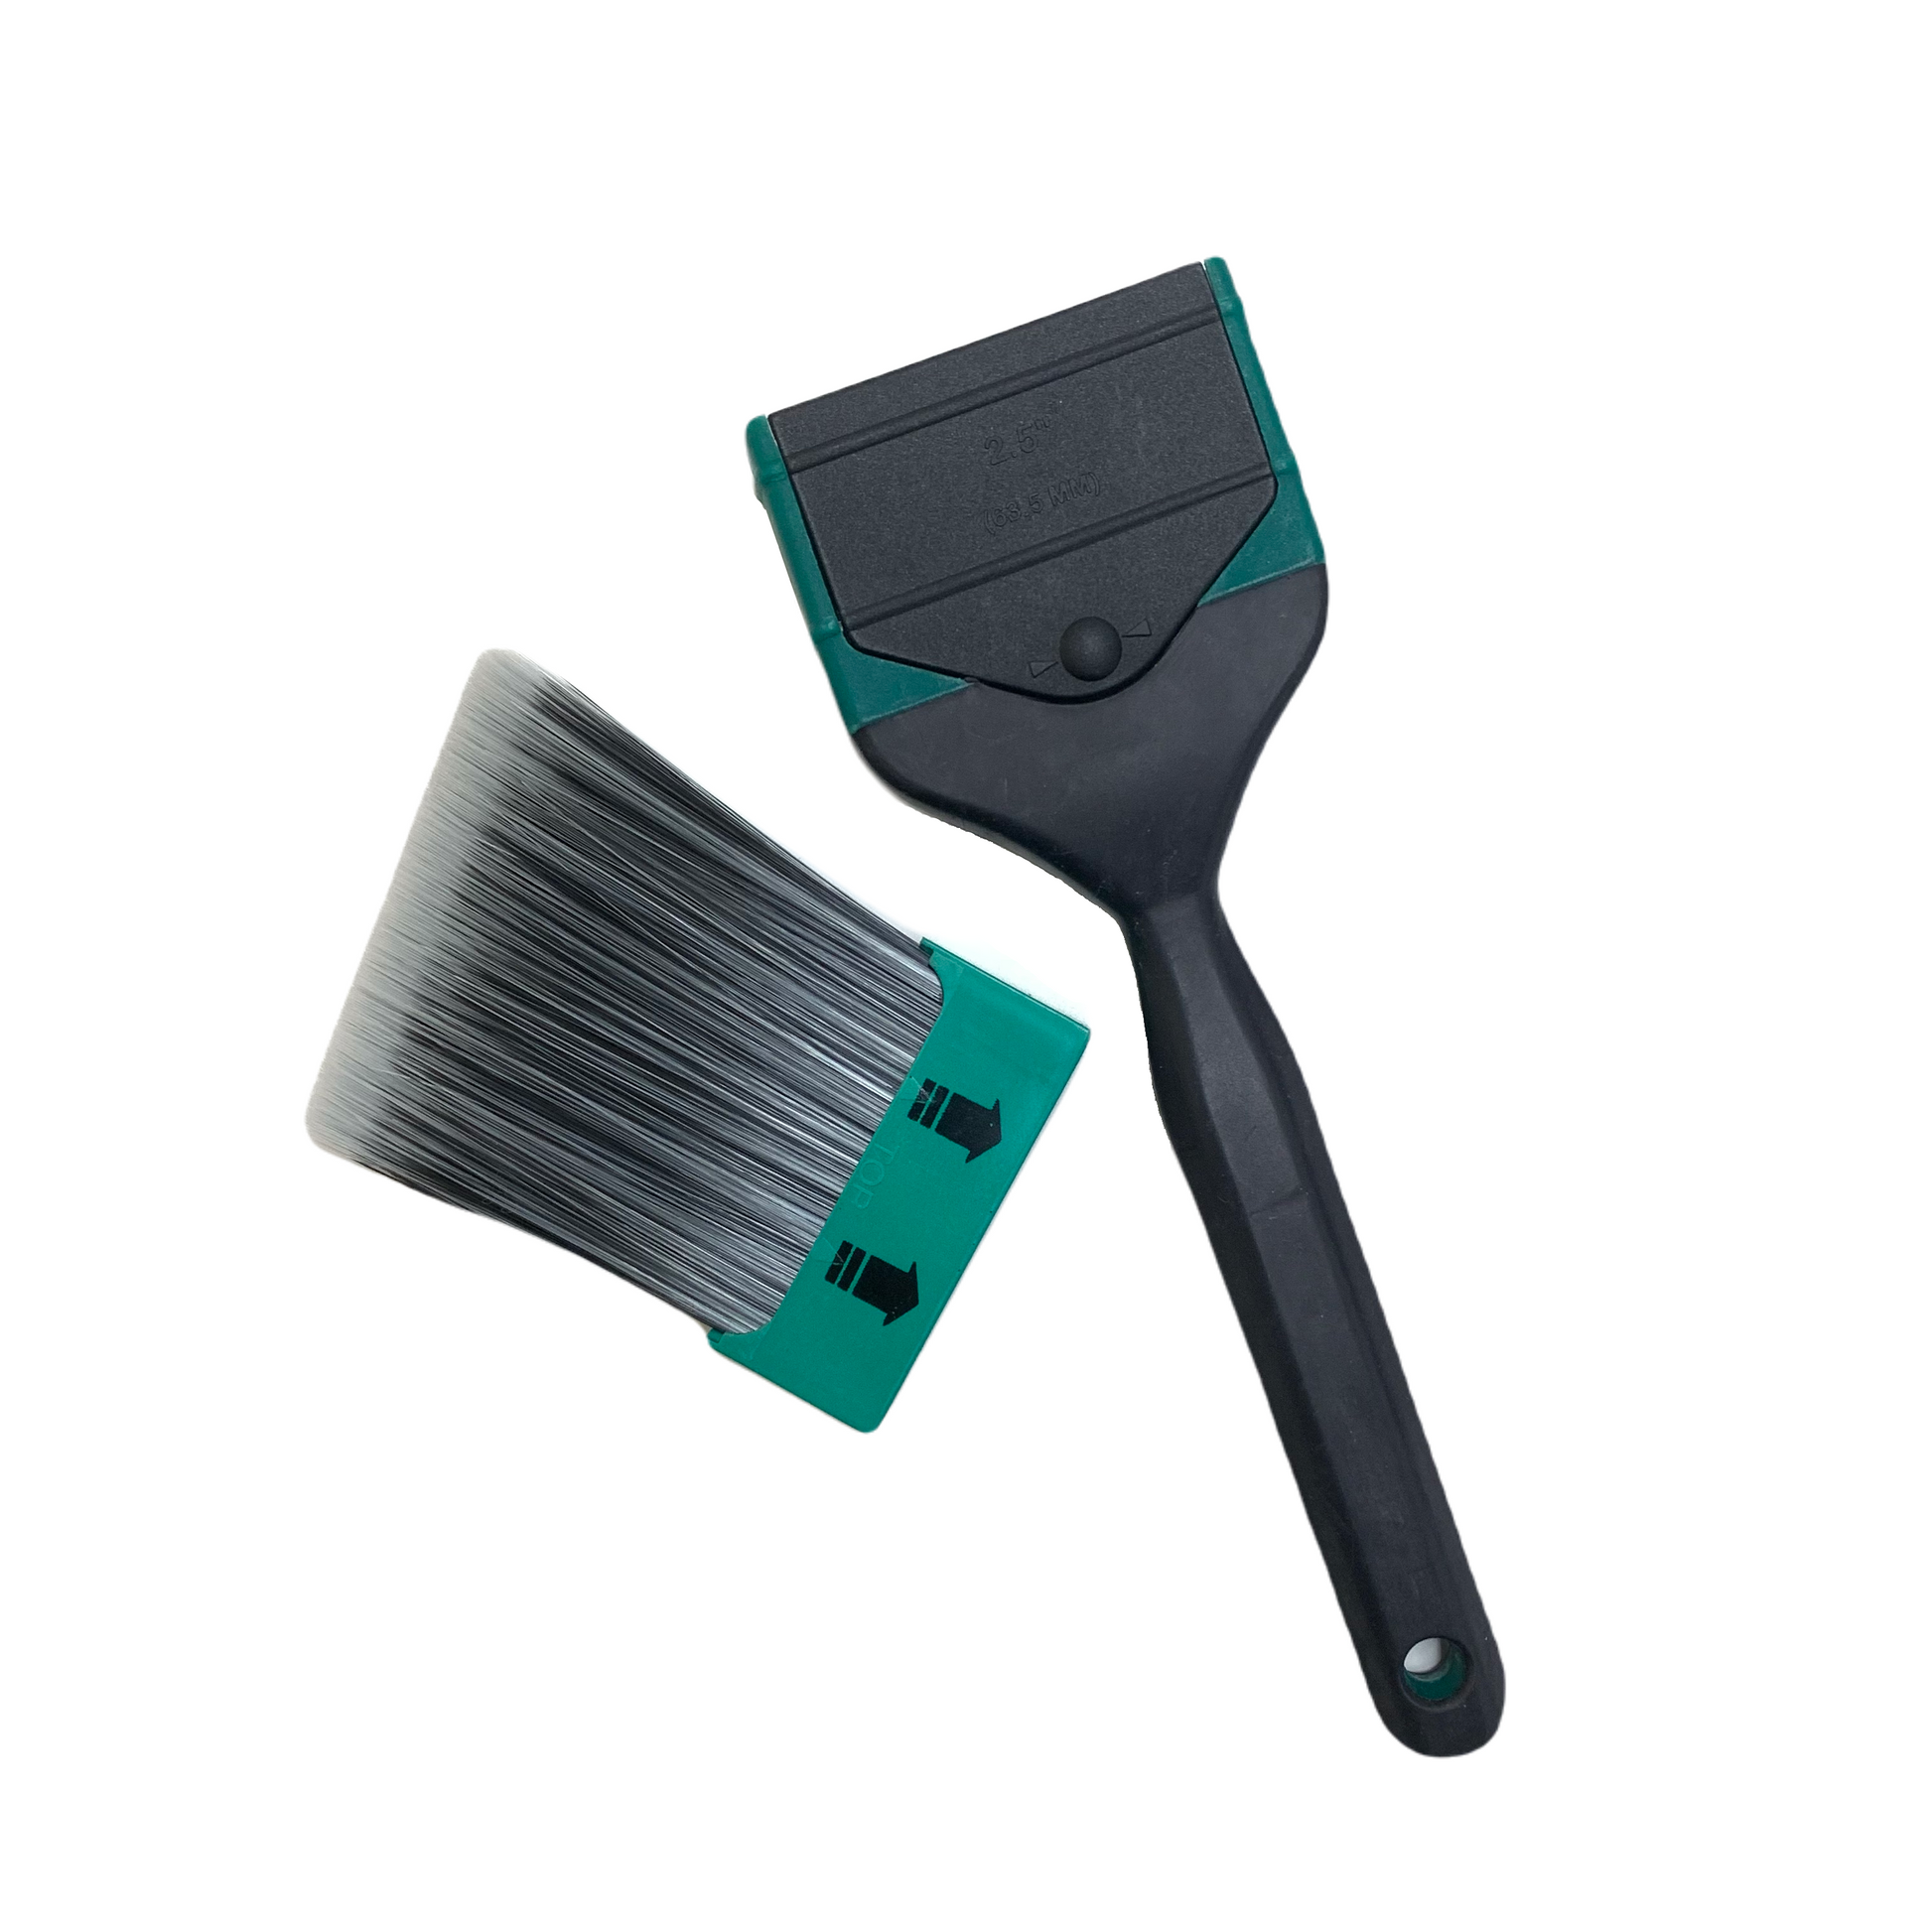 Pro Brush - Paint Brush and Bristle Refill